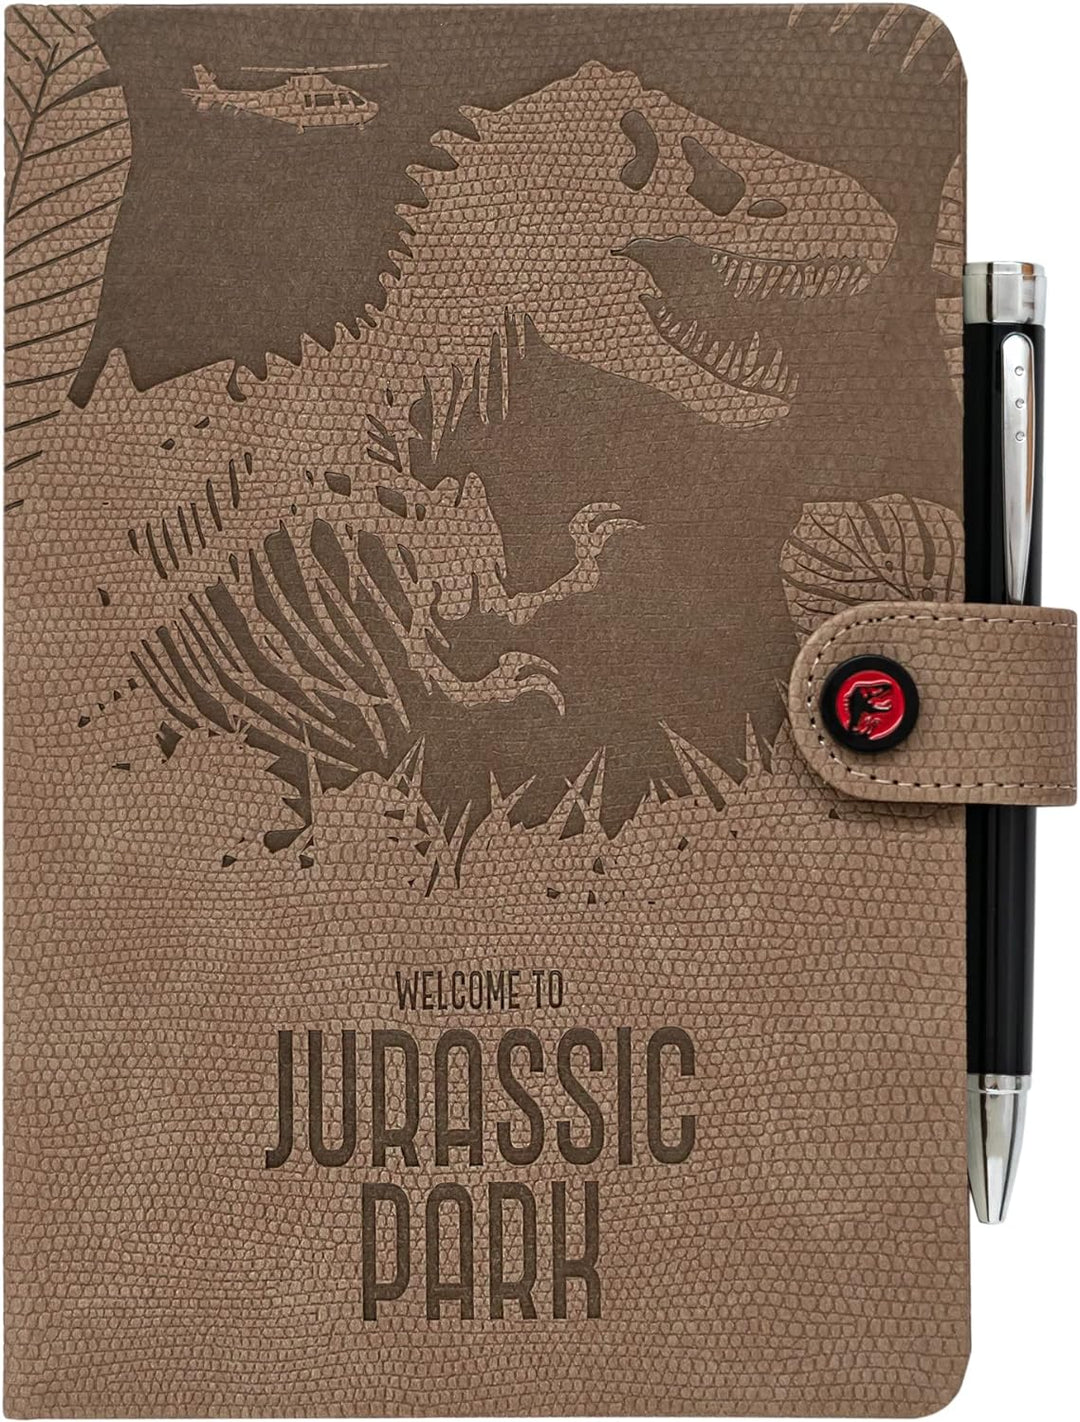 Grupo Erik Jurassic Park A5 Premium Notebook With Pojector Pen | Jurassic Park Gifts